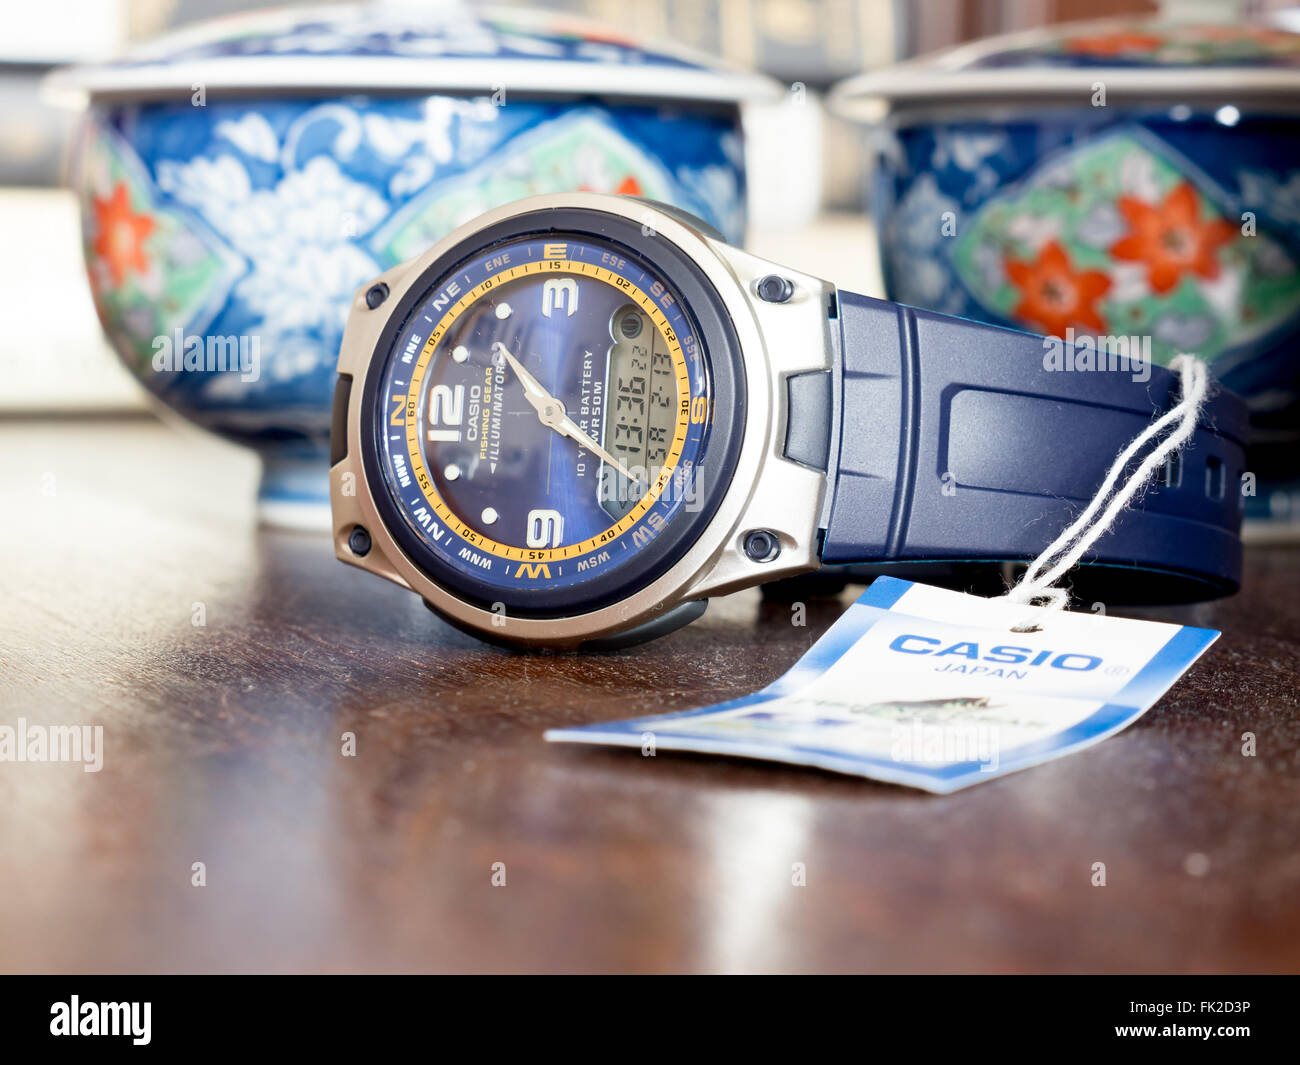 GOMEL, BELARUS - FEBRUARY 13, 2016: The Japanese watch Casio Fishing Gear  10 Years Battery AW-82-1AVDF. Casio Computer Company Stock Photo - Alamy